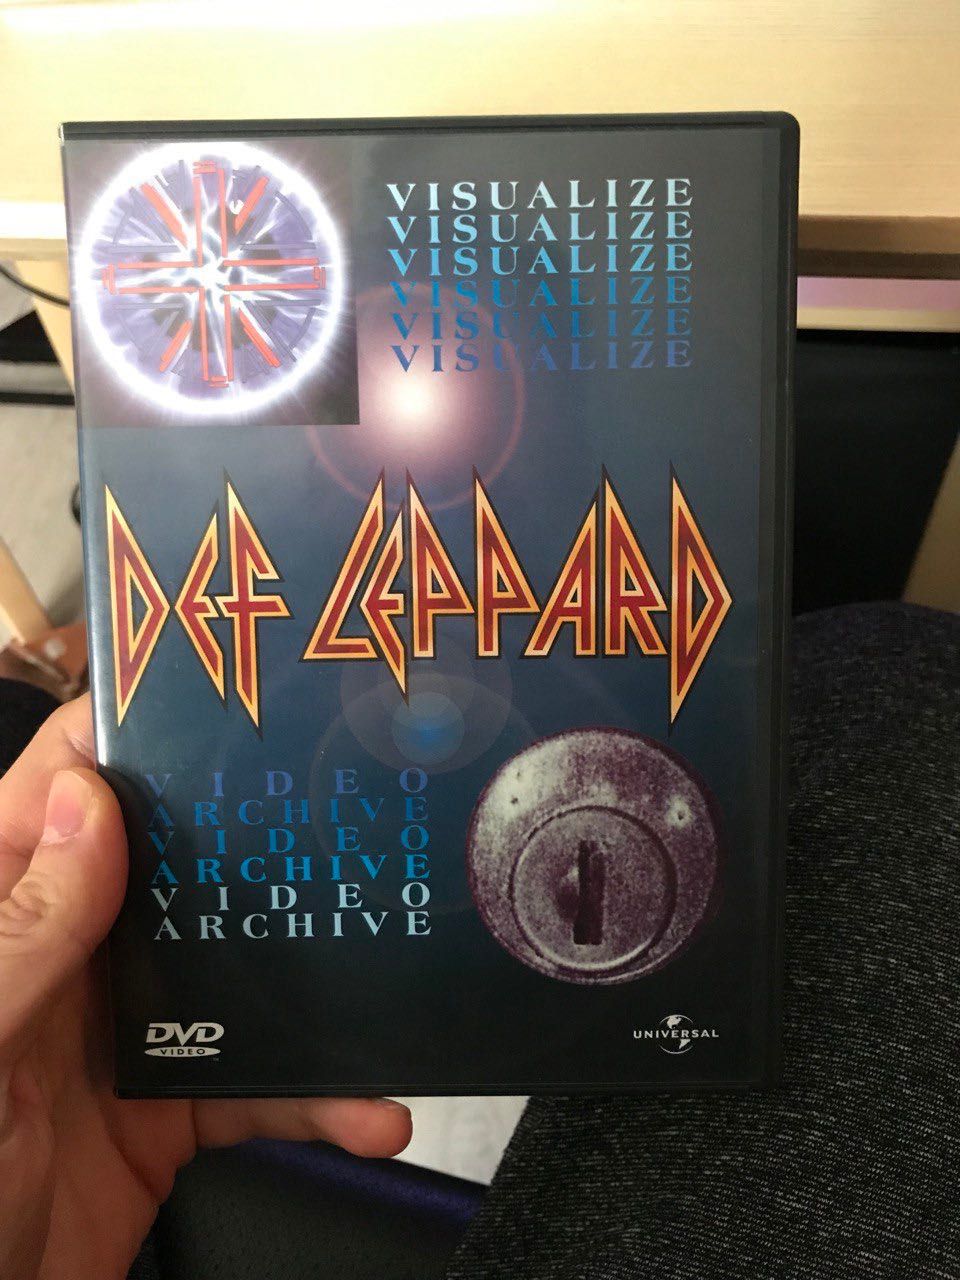 DVD Def Leppard "Visualize"